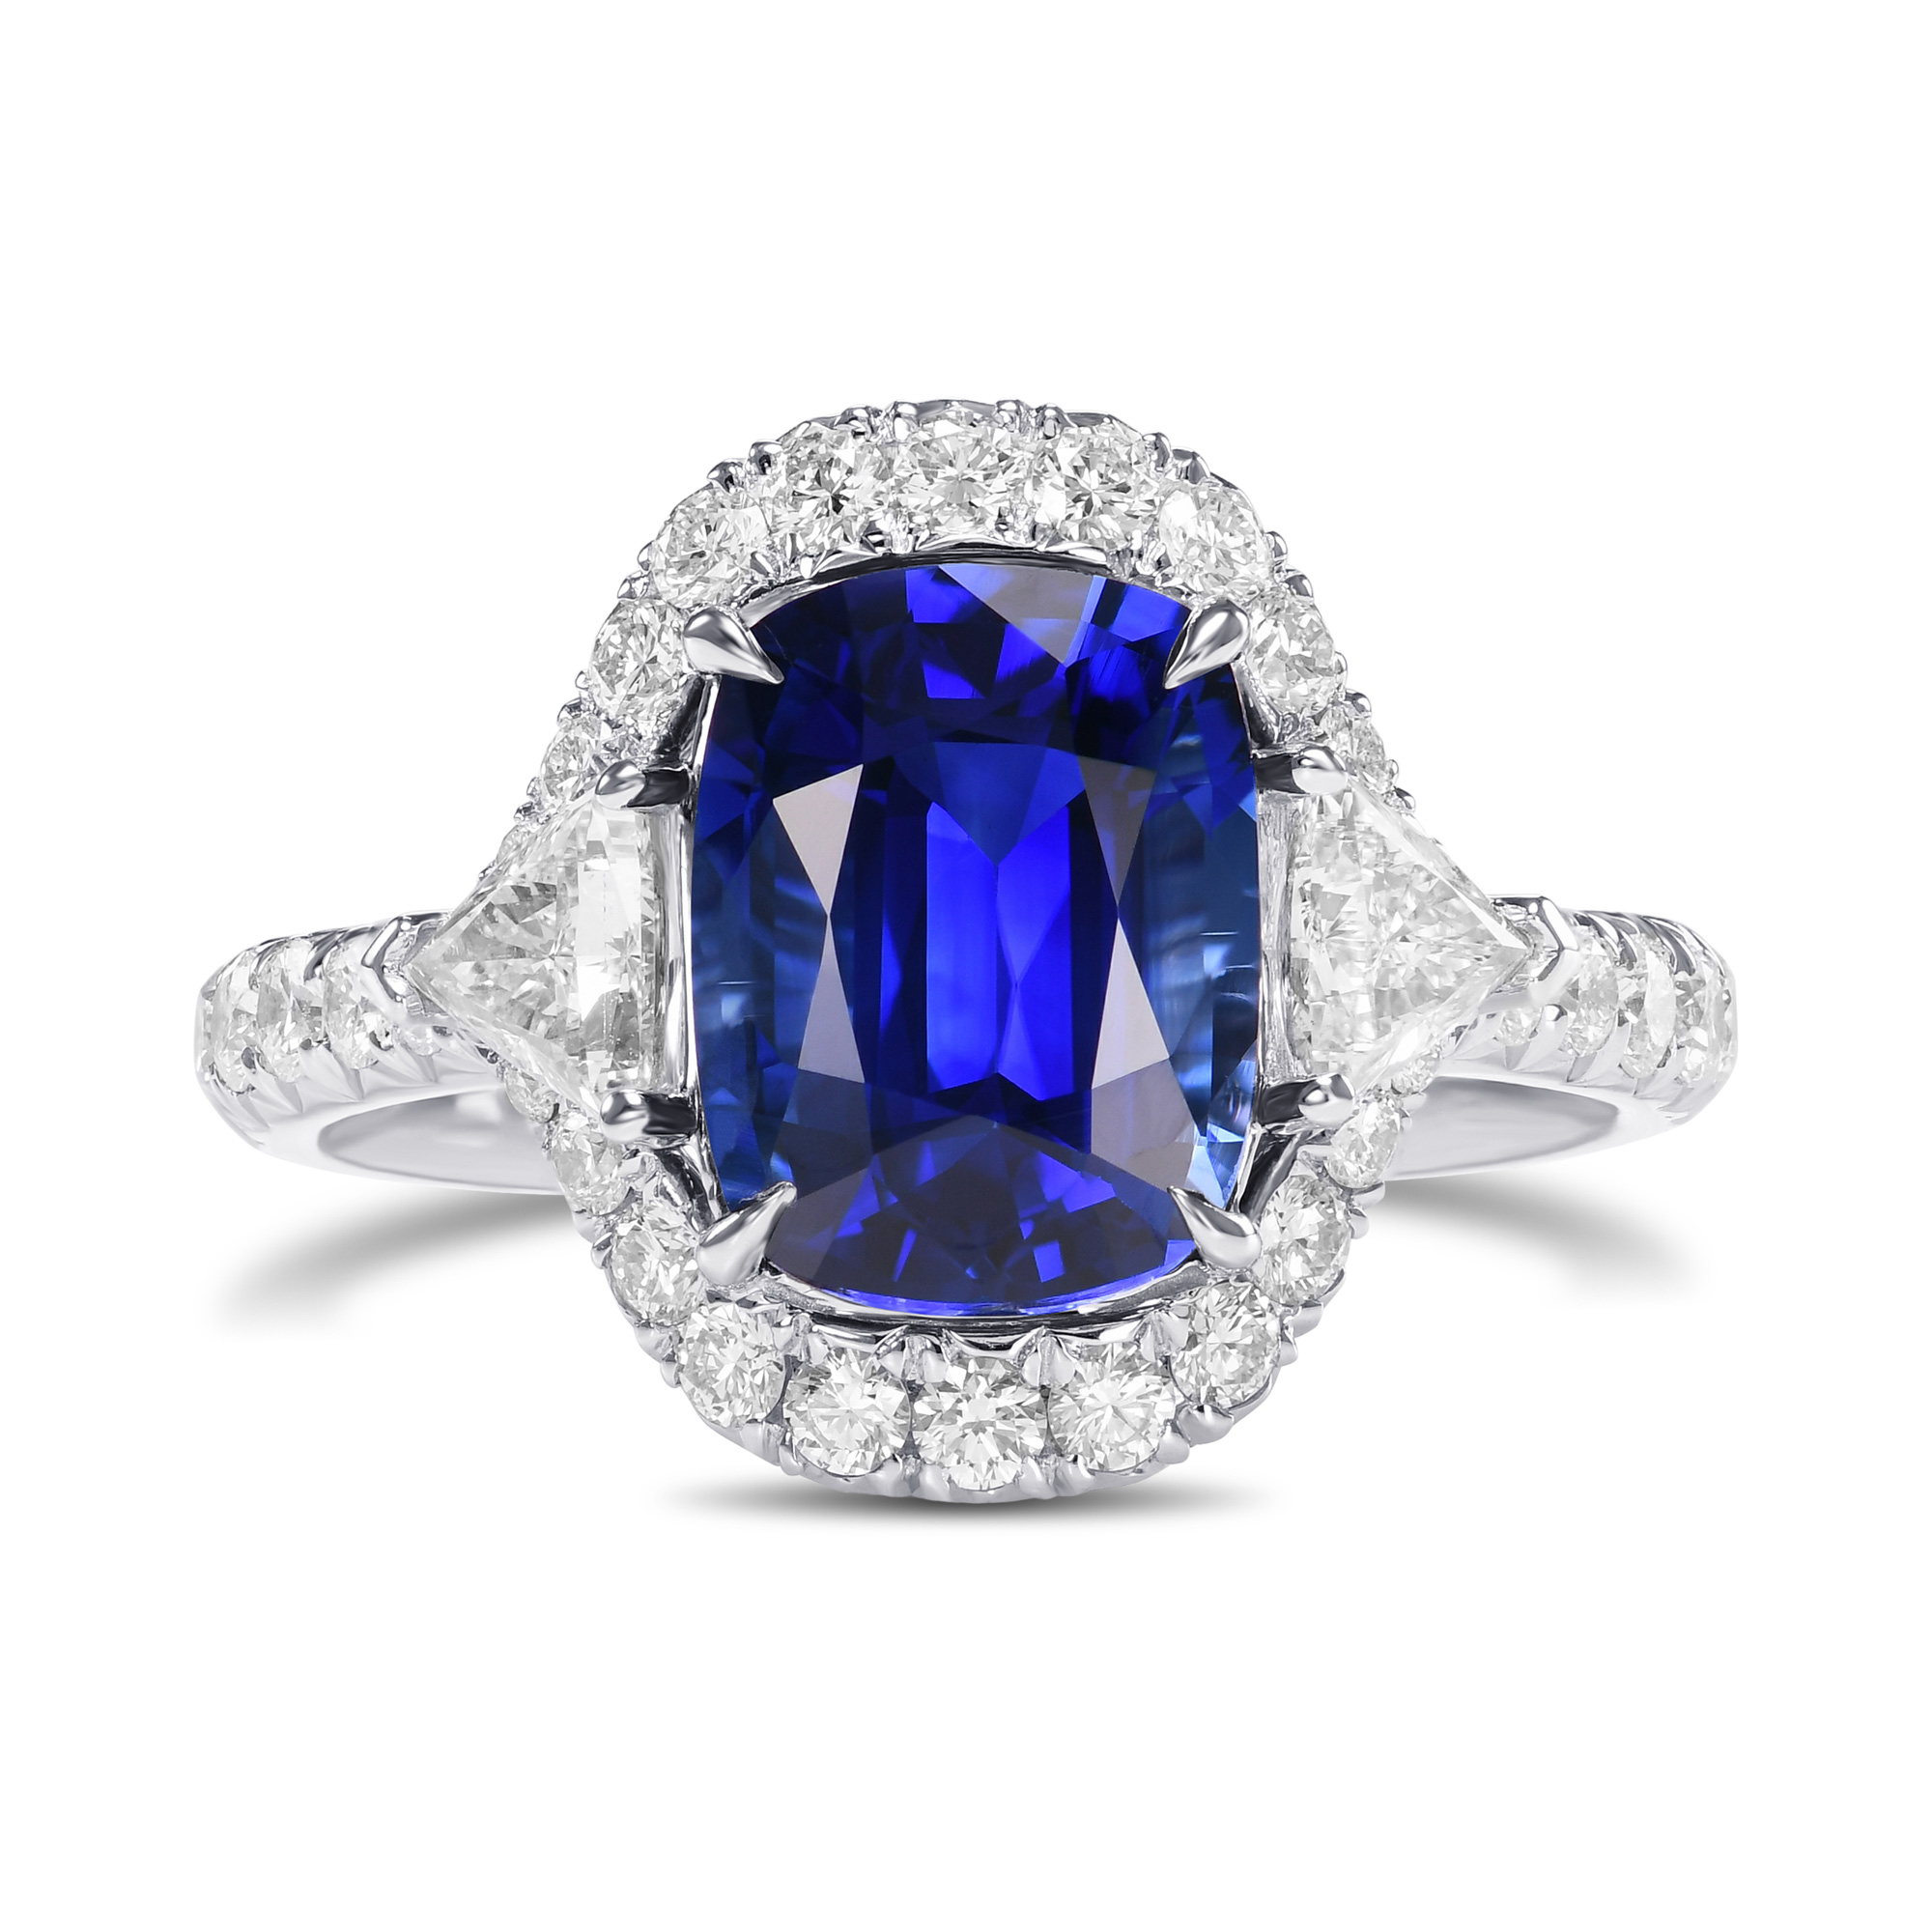 Royal Blue Cushion Sapphire & Triangle Diamond Halo Ring, SKU 578282 (4.42Ct TW)